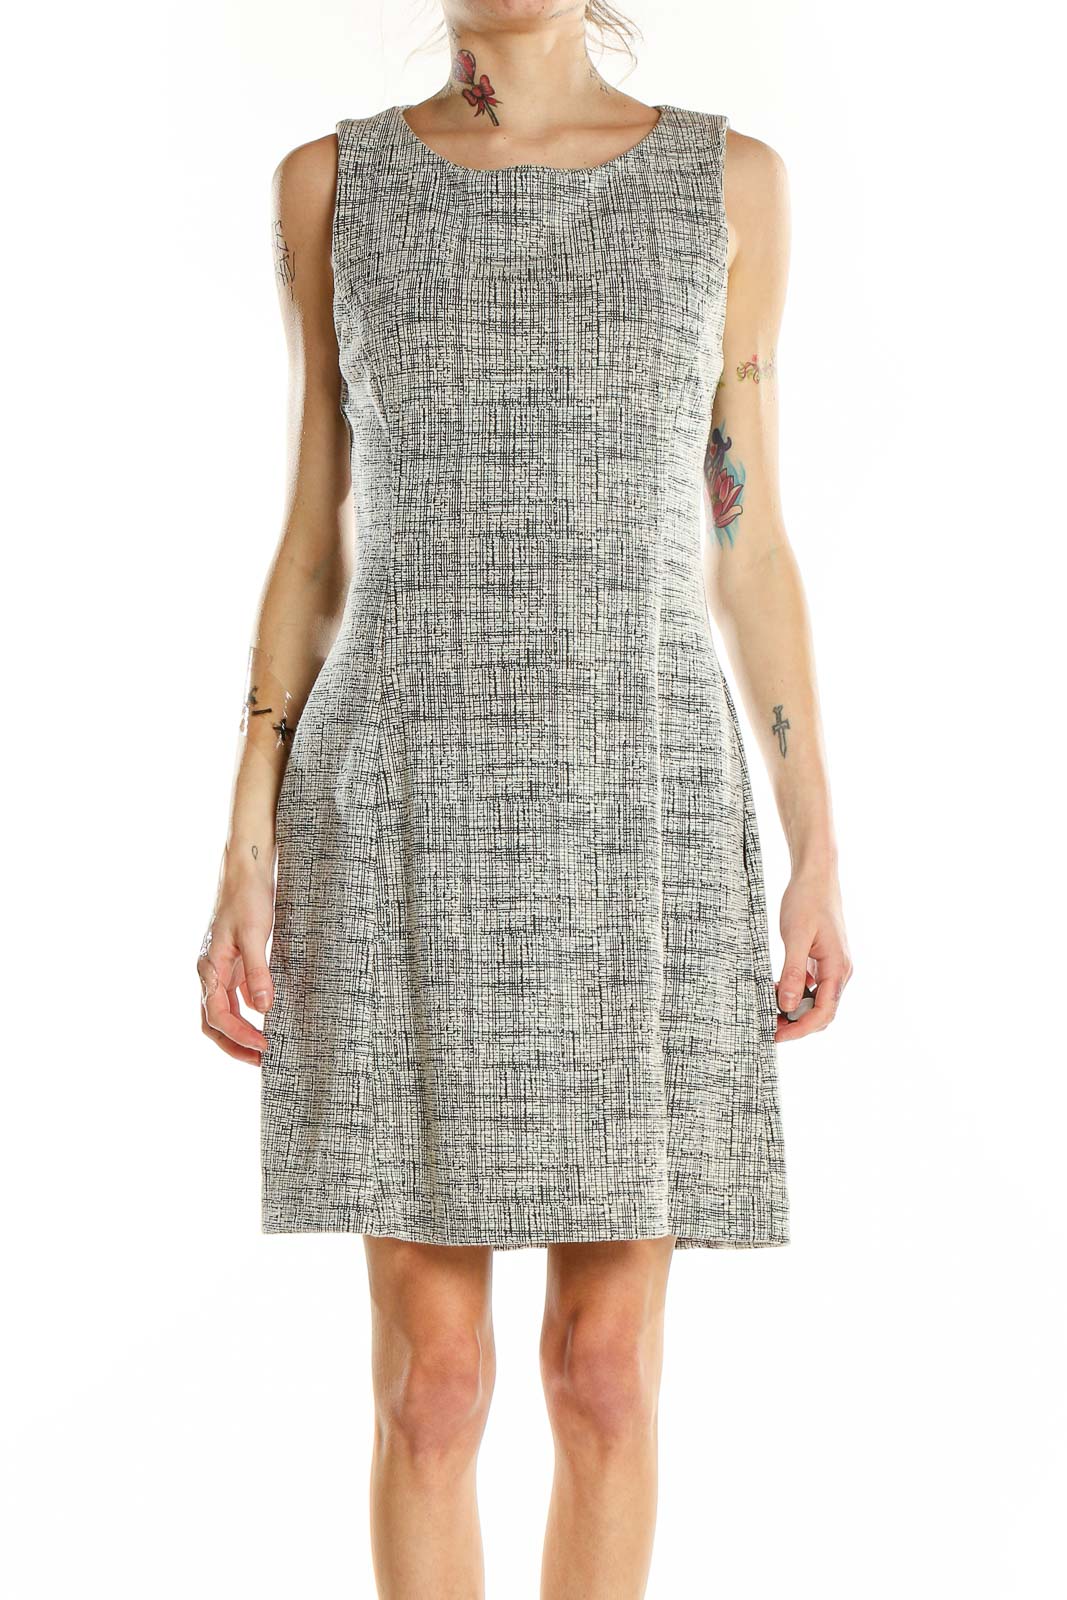 Grey Sleeveless Textured Dress Front